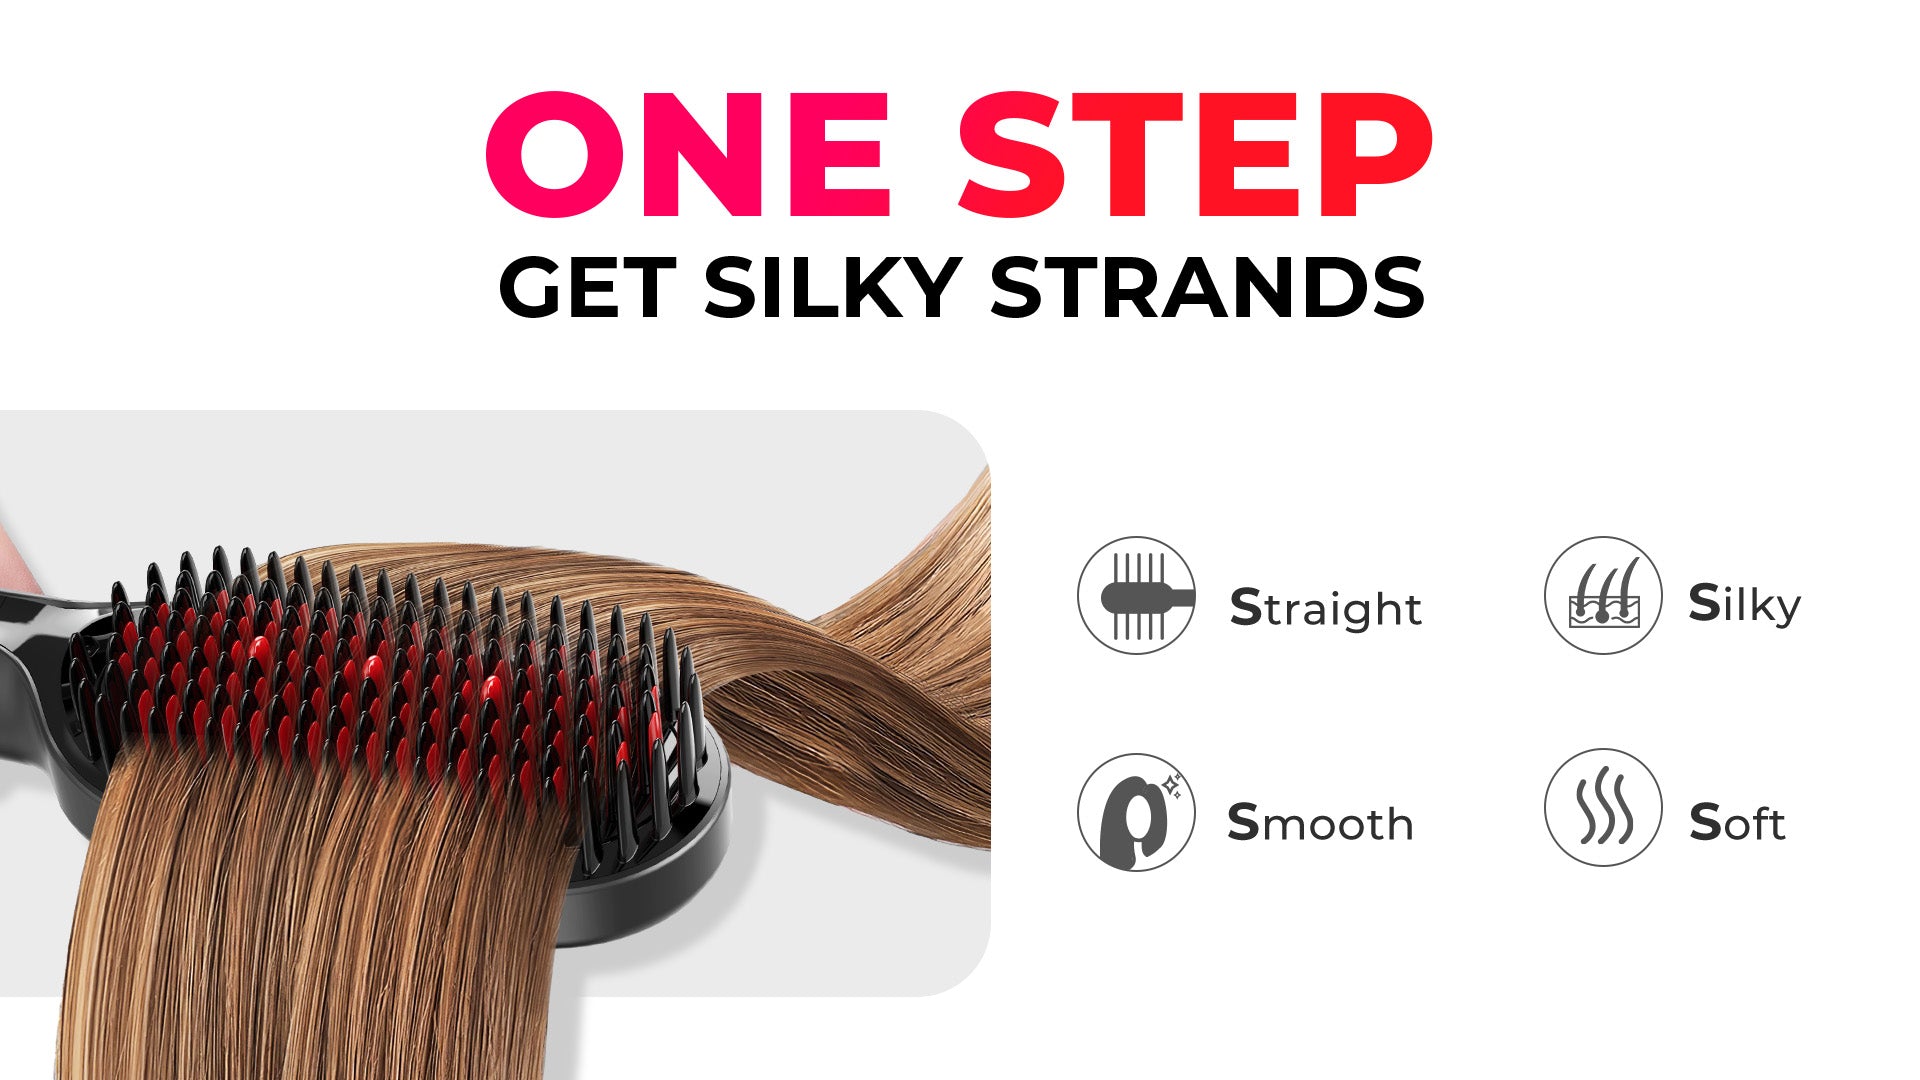 One Step Get Silky Strands